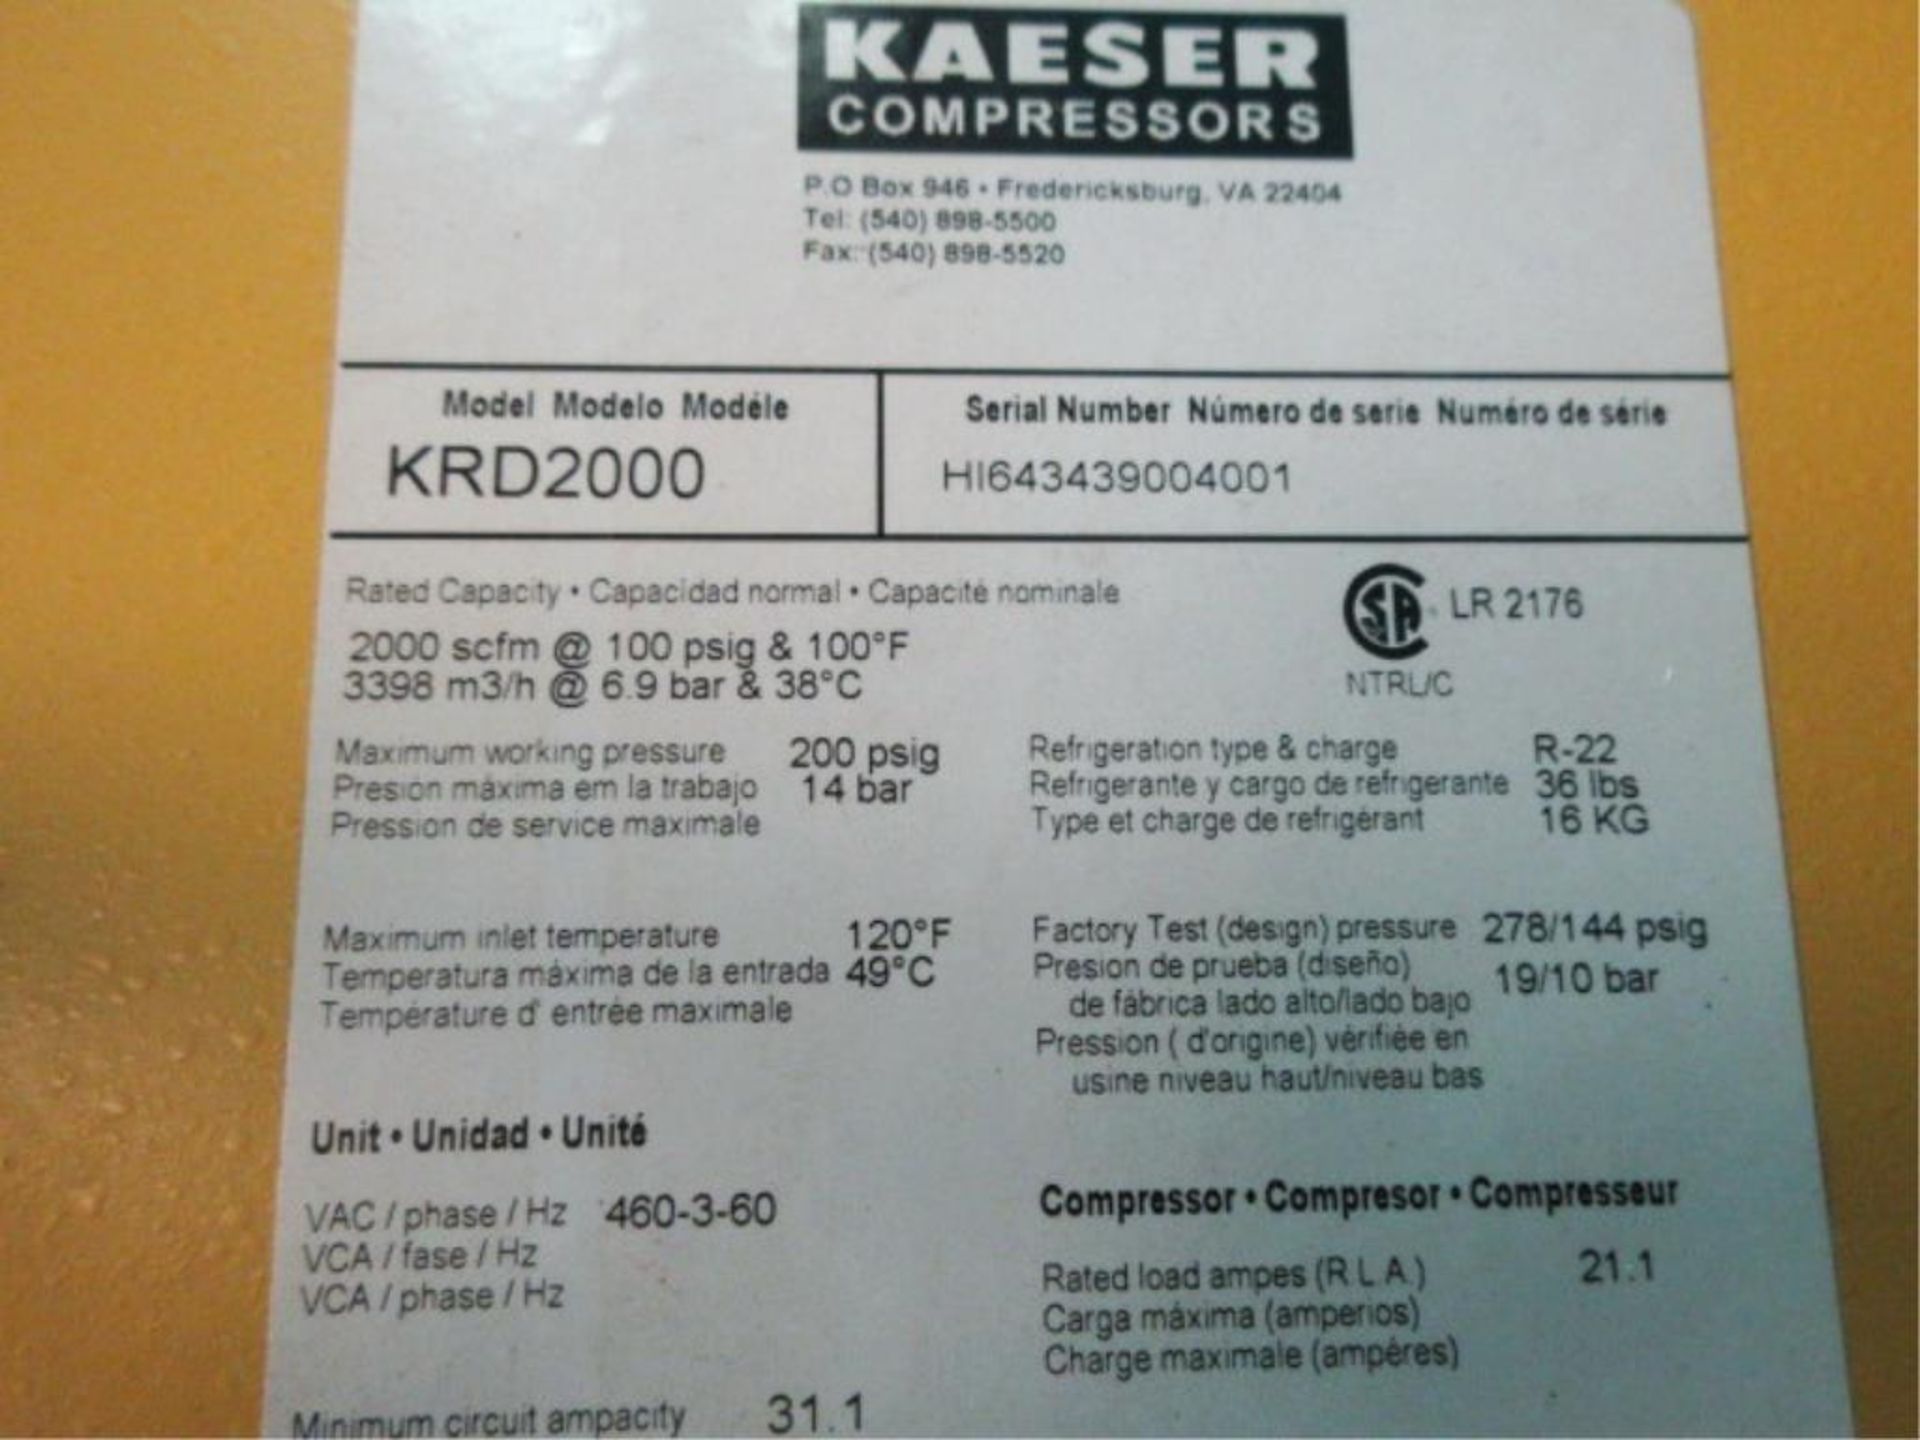 Kaeser KRD2000 Refrigerated Compressed Air Dryer, rated capacity 2000 scfm@100F, R-22 refrigerant, - Image 6 of 6